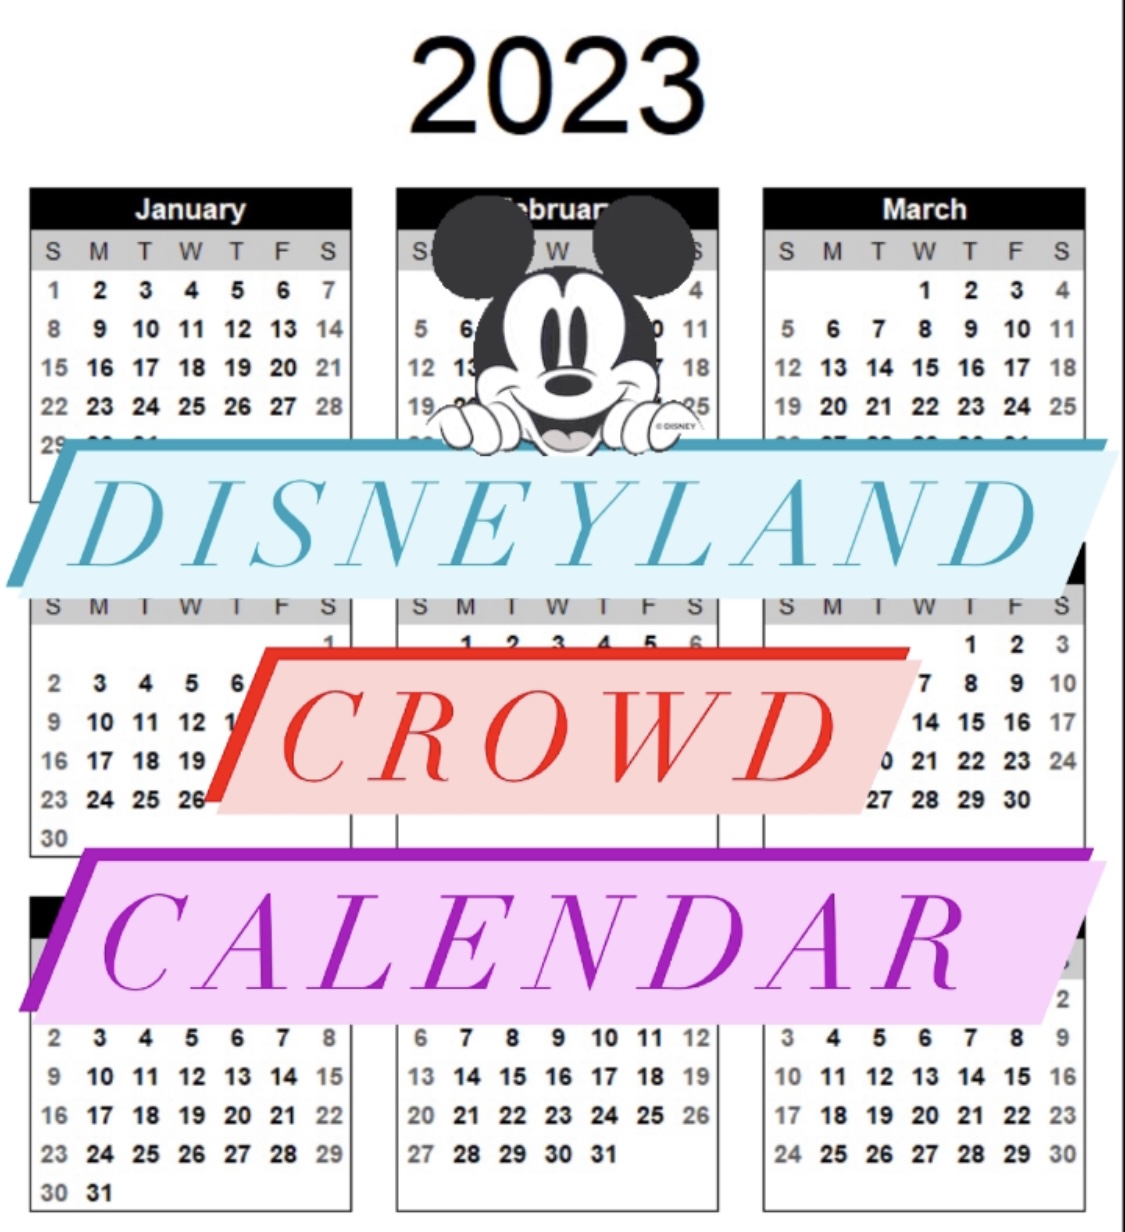 Walt Disney World Crowd Calendar March 2023 Get Latest Map Update